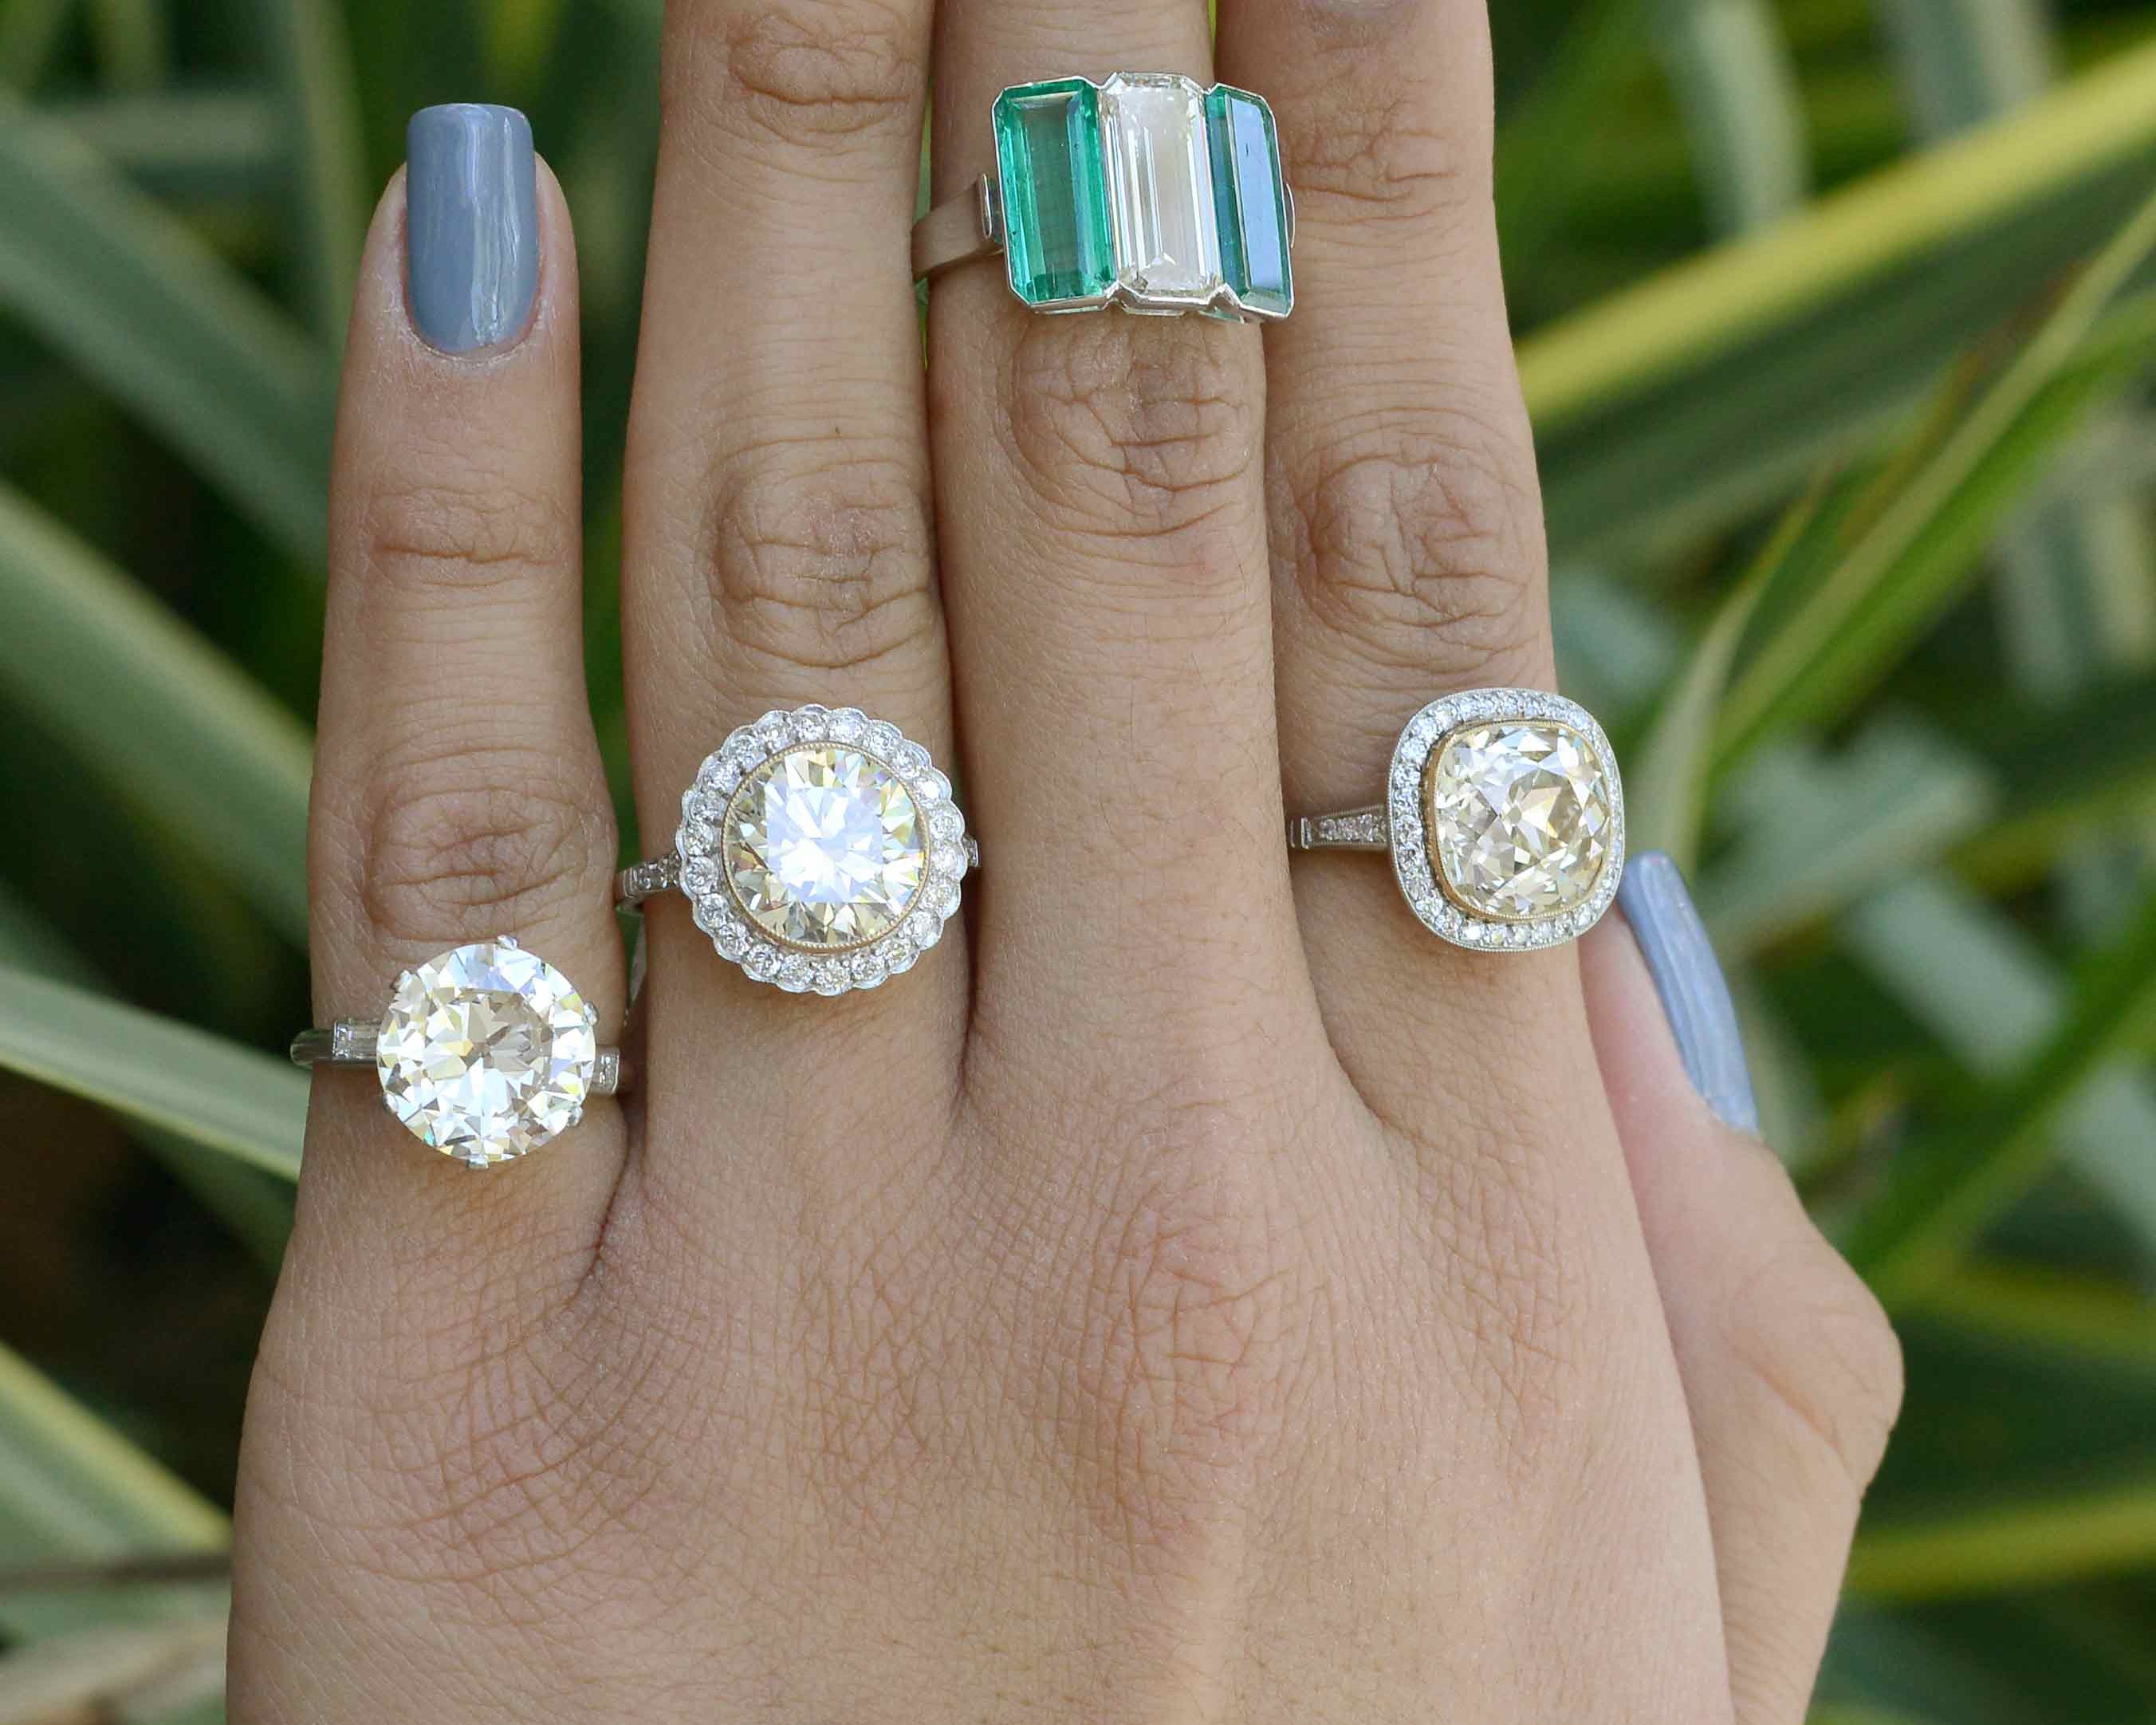 Big diamond and gemstone engagement rings.